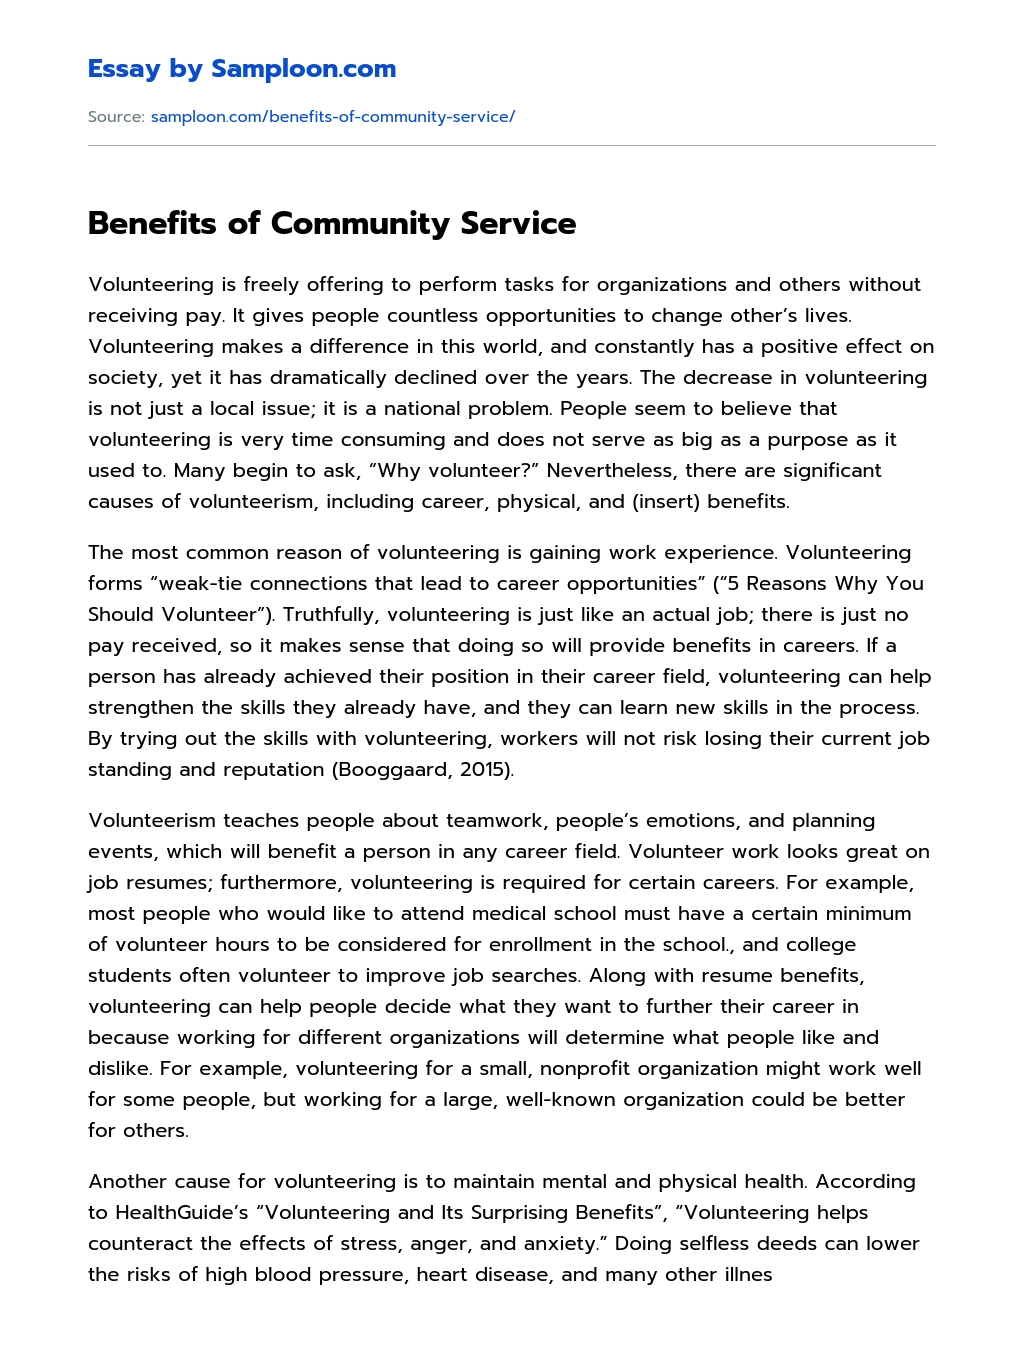 Benefits of Community Service essay